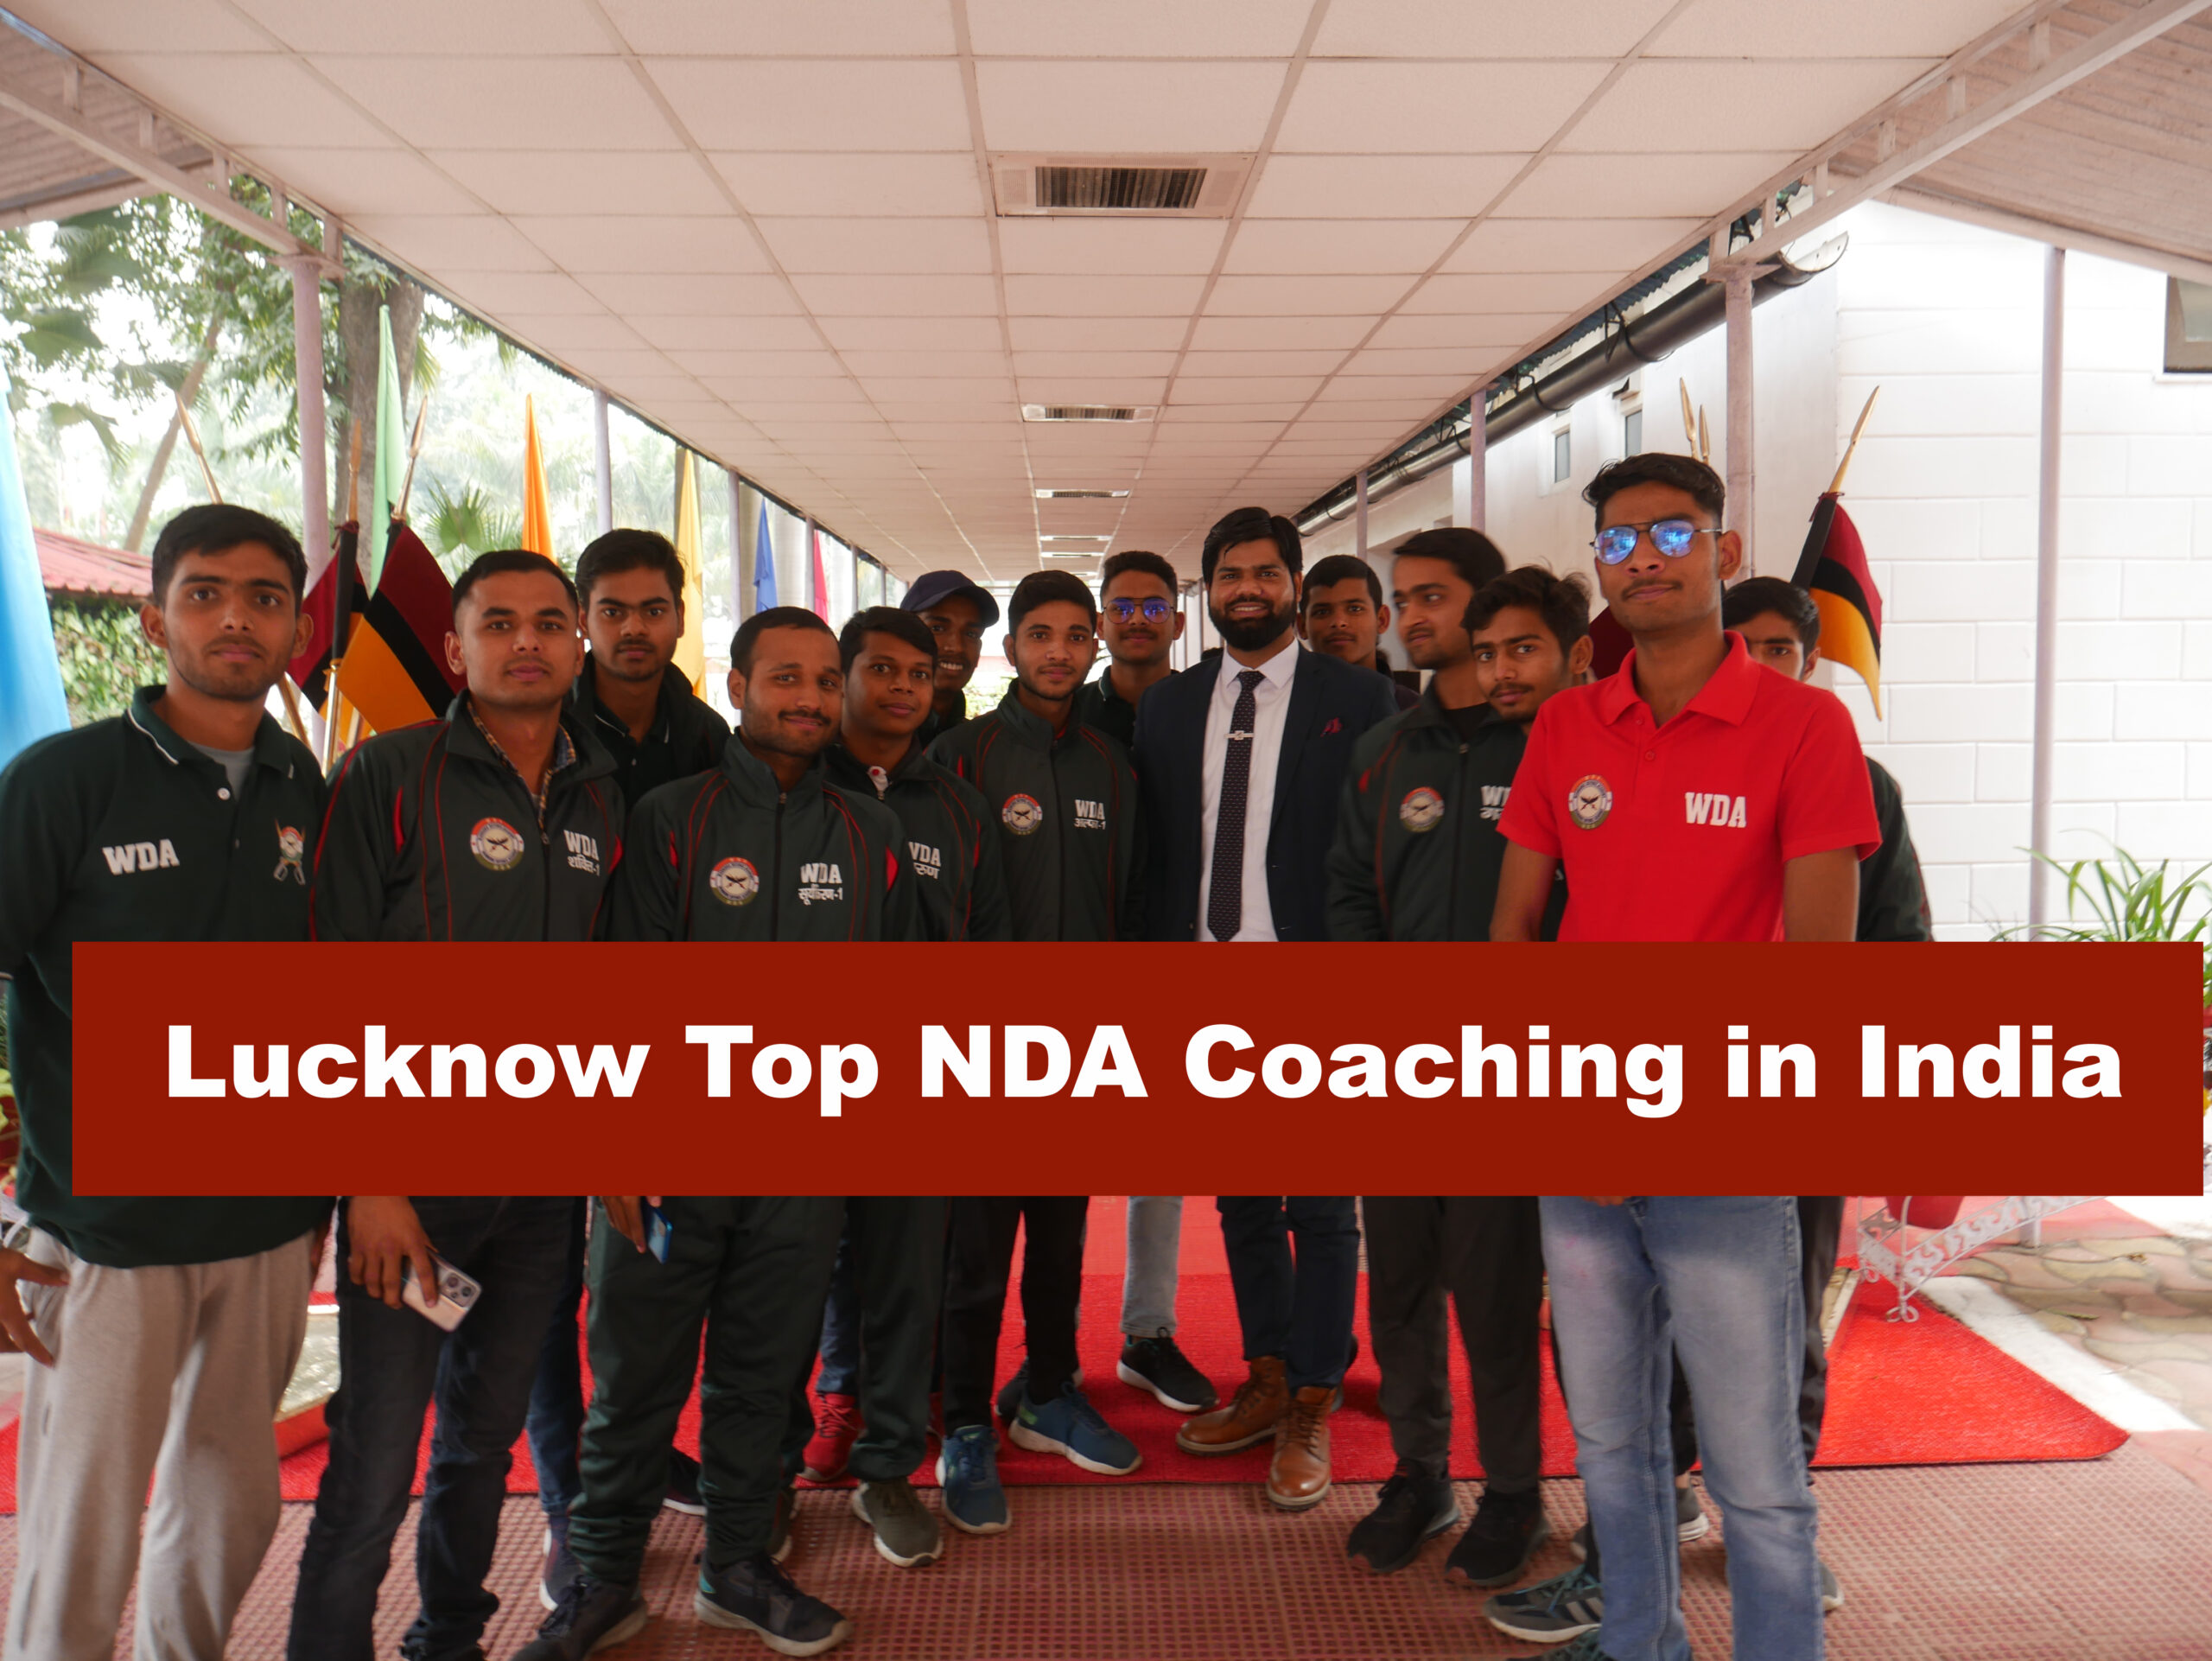 NDA Best Coaching in India